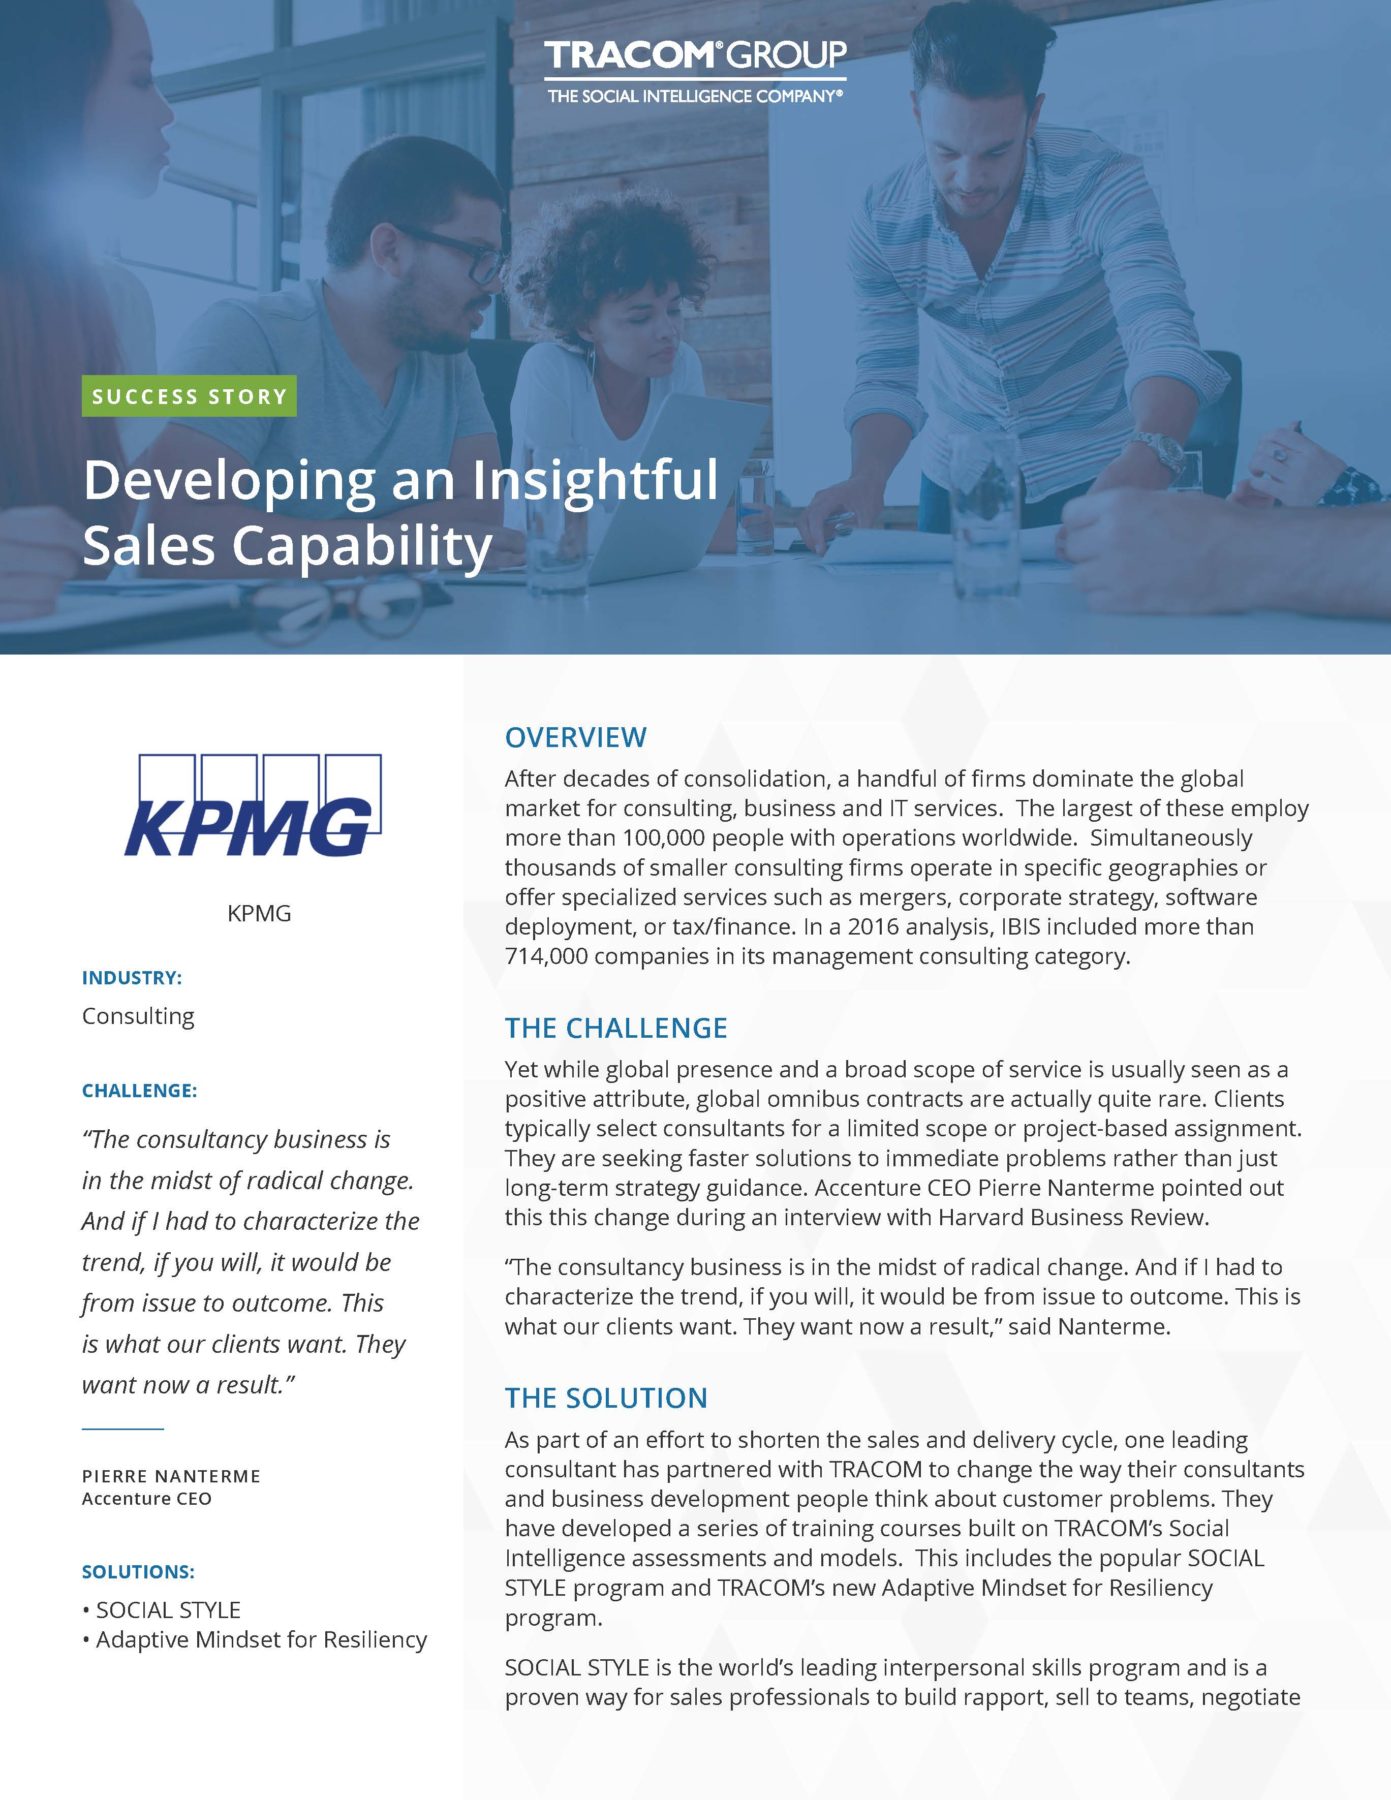 KPMG Sales success story